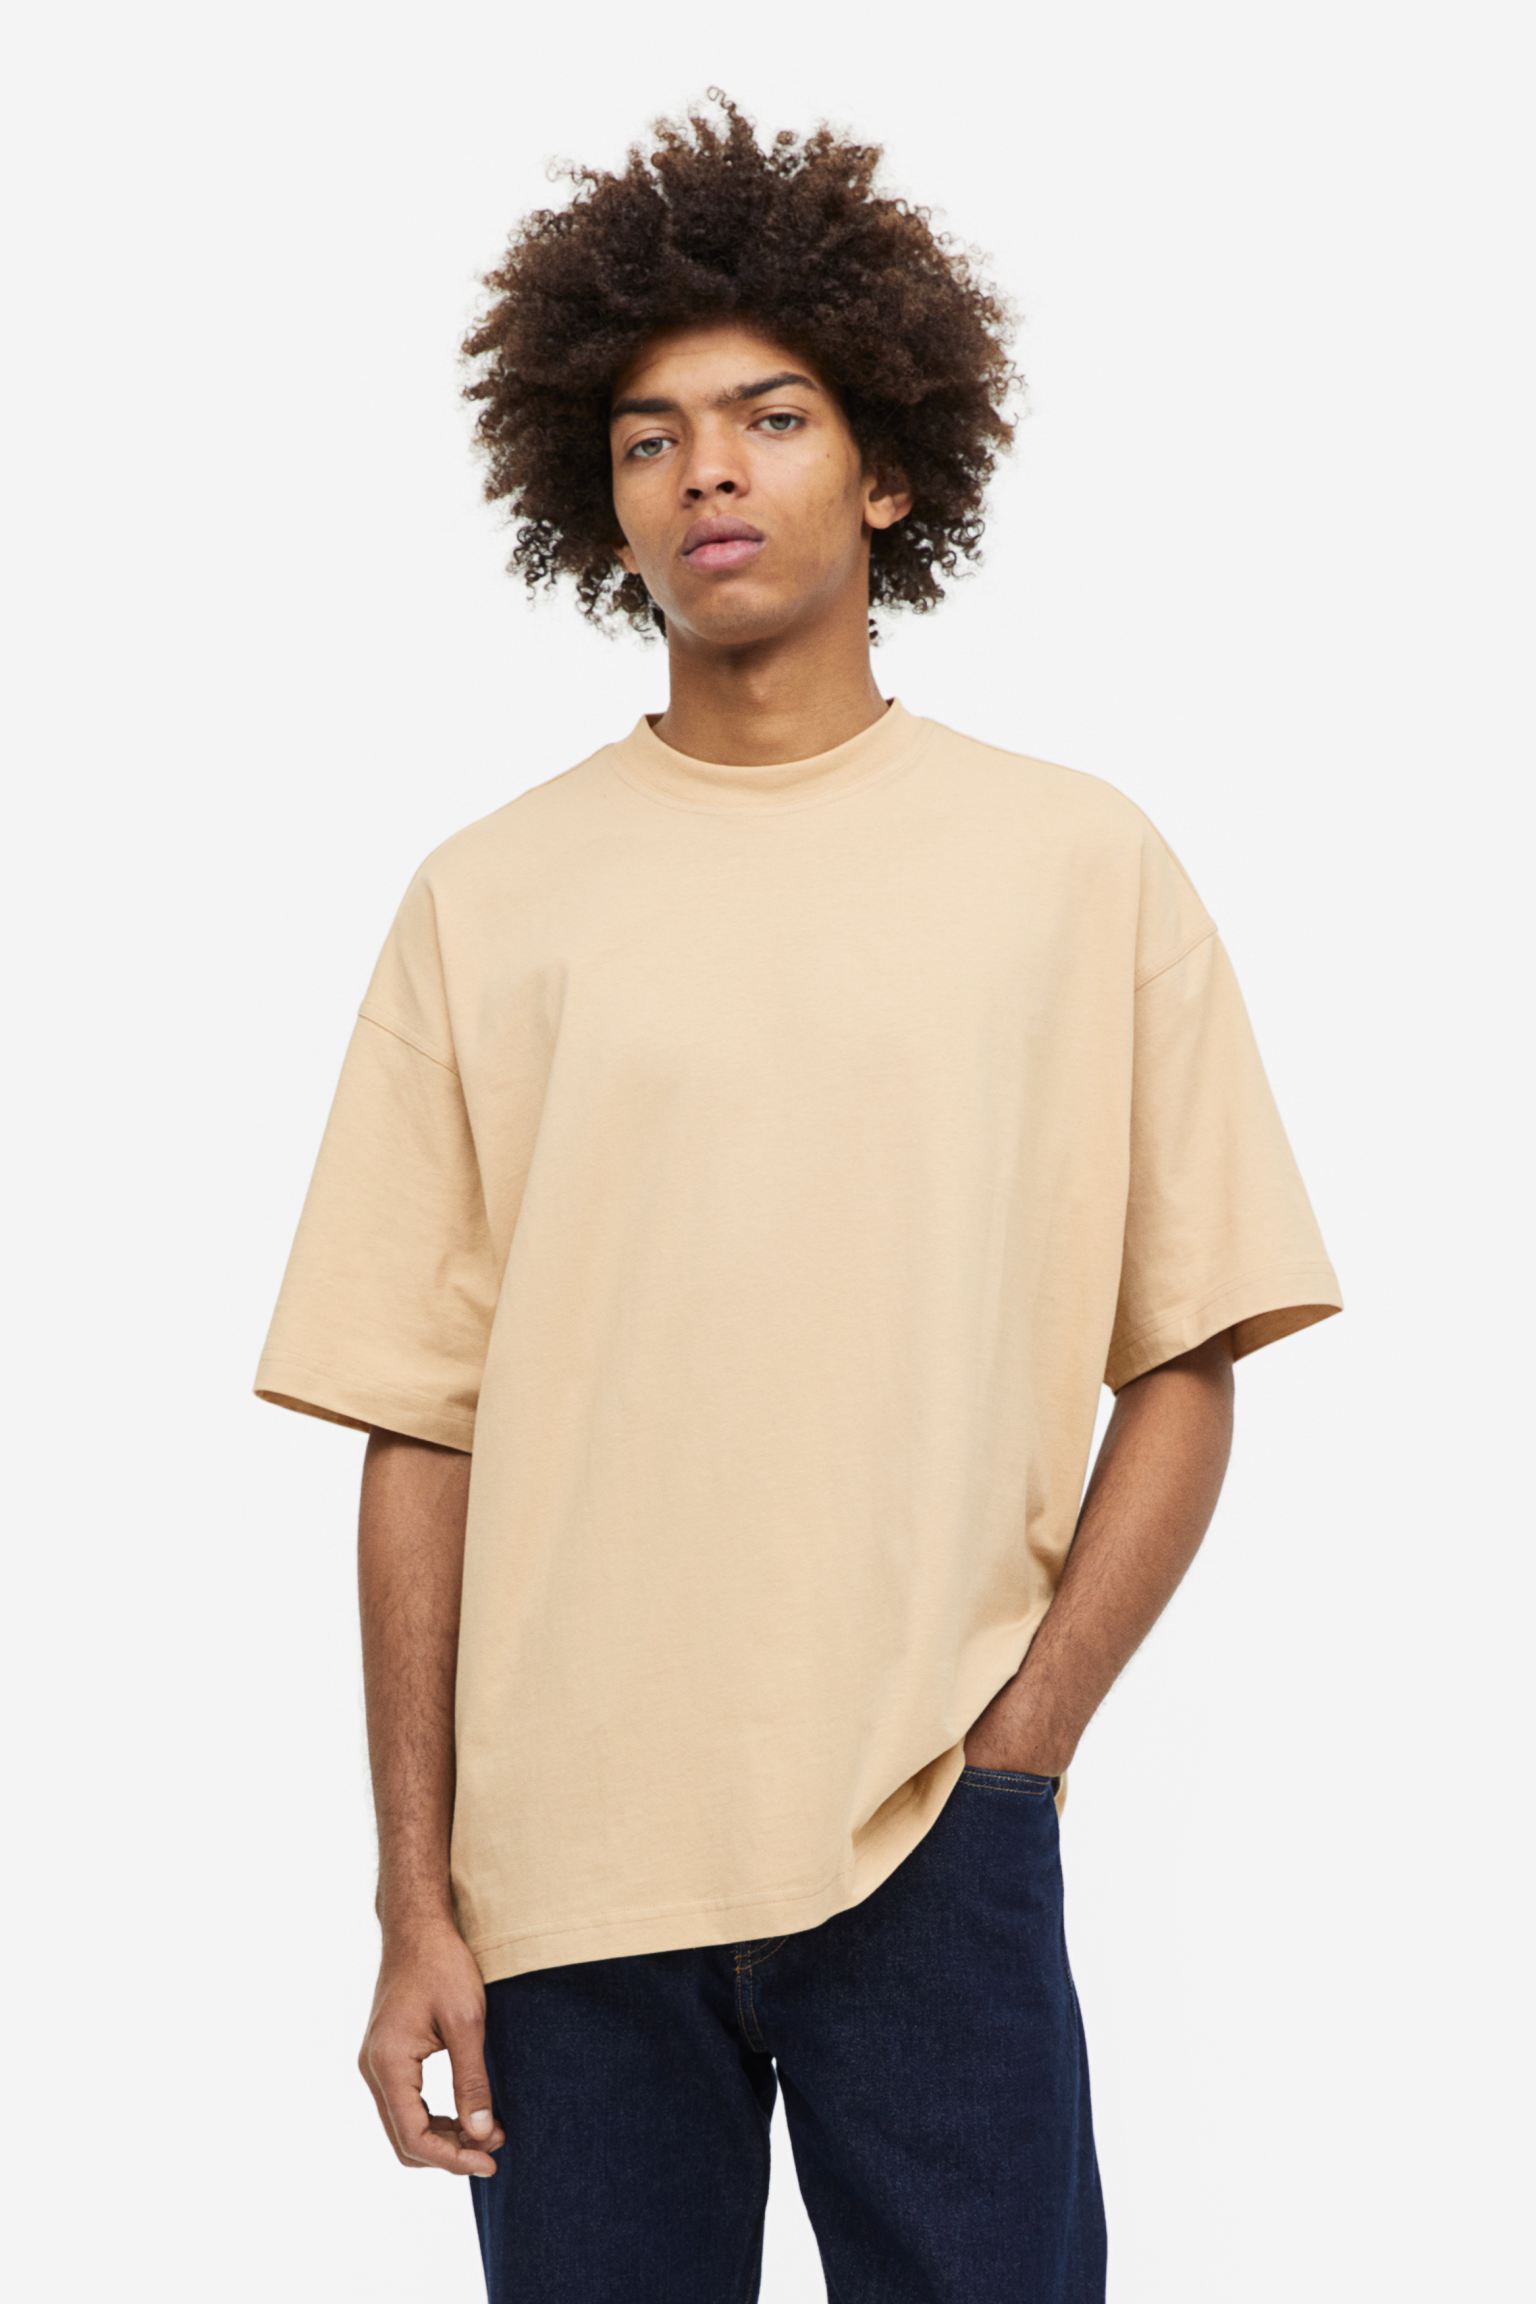 Beige Solid Oversized T-shirt for Men - Hawkz Lifestyle